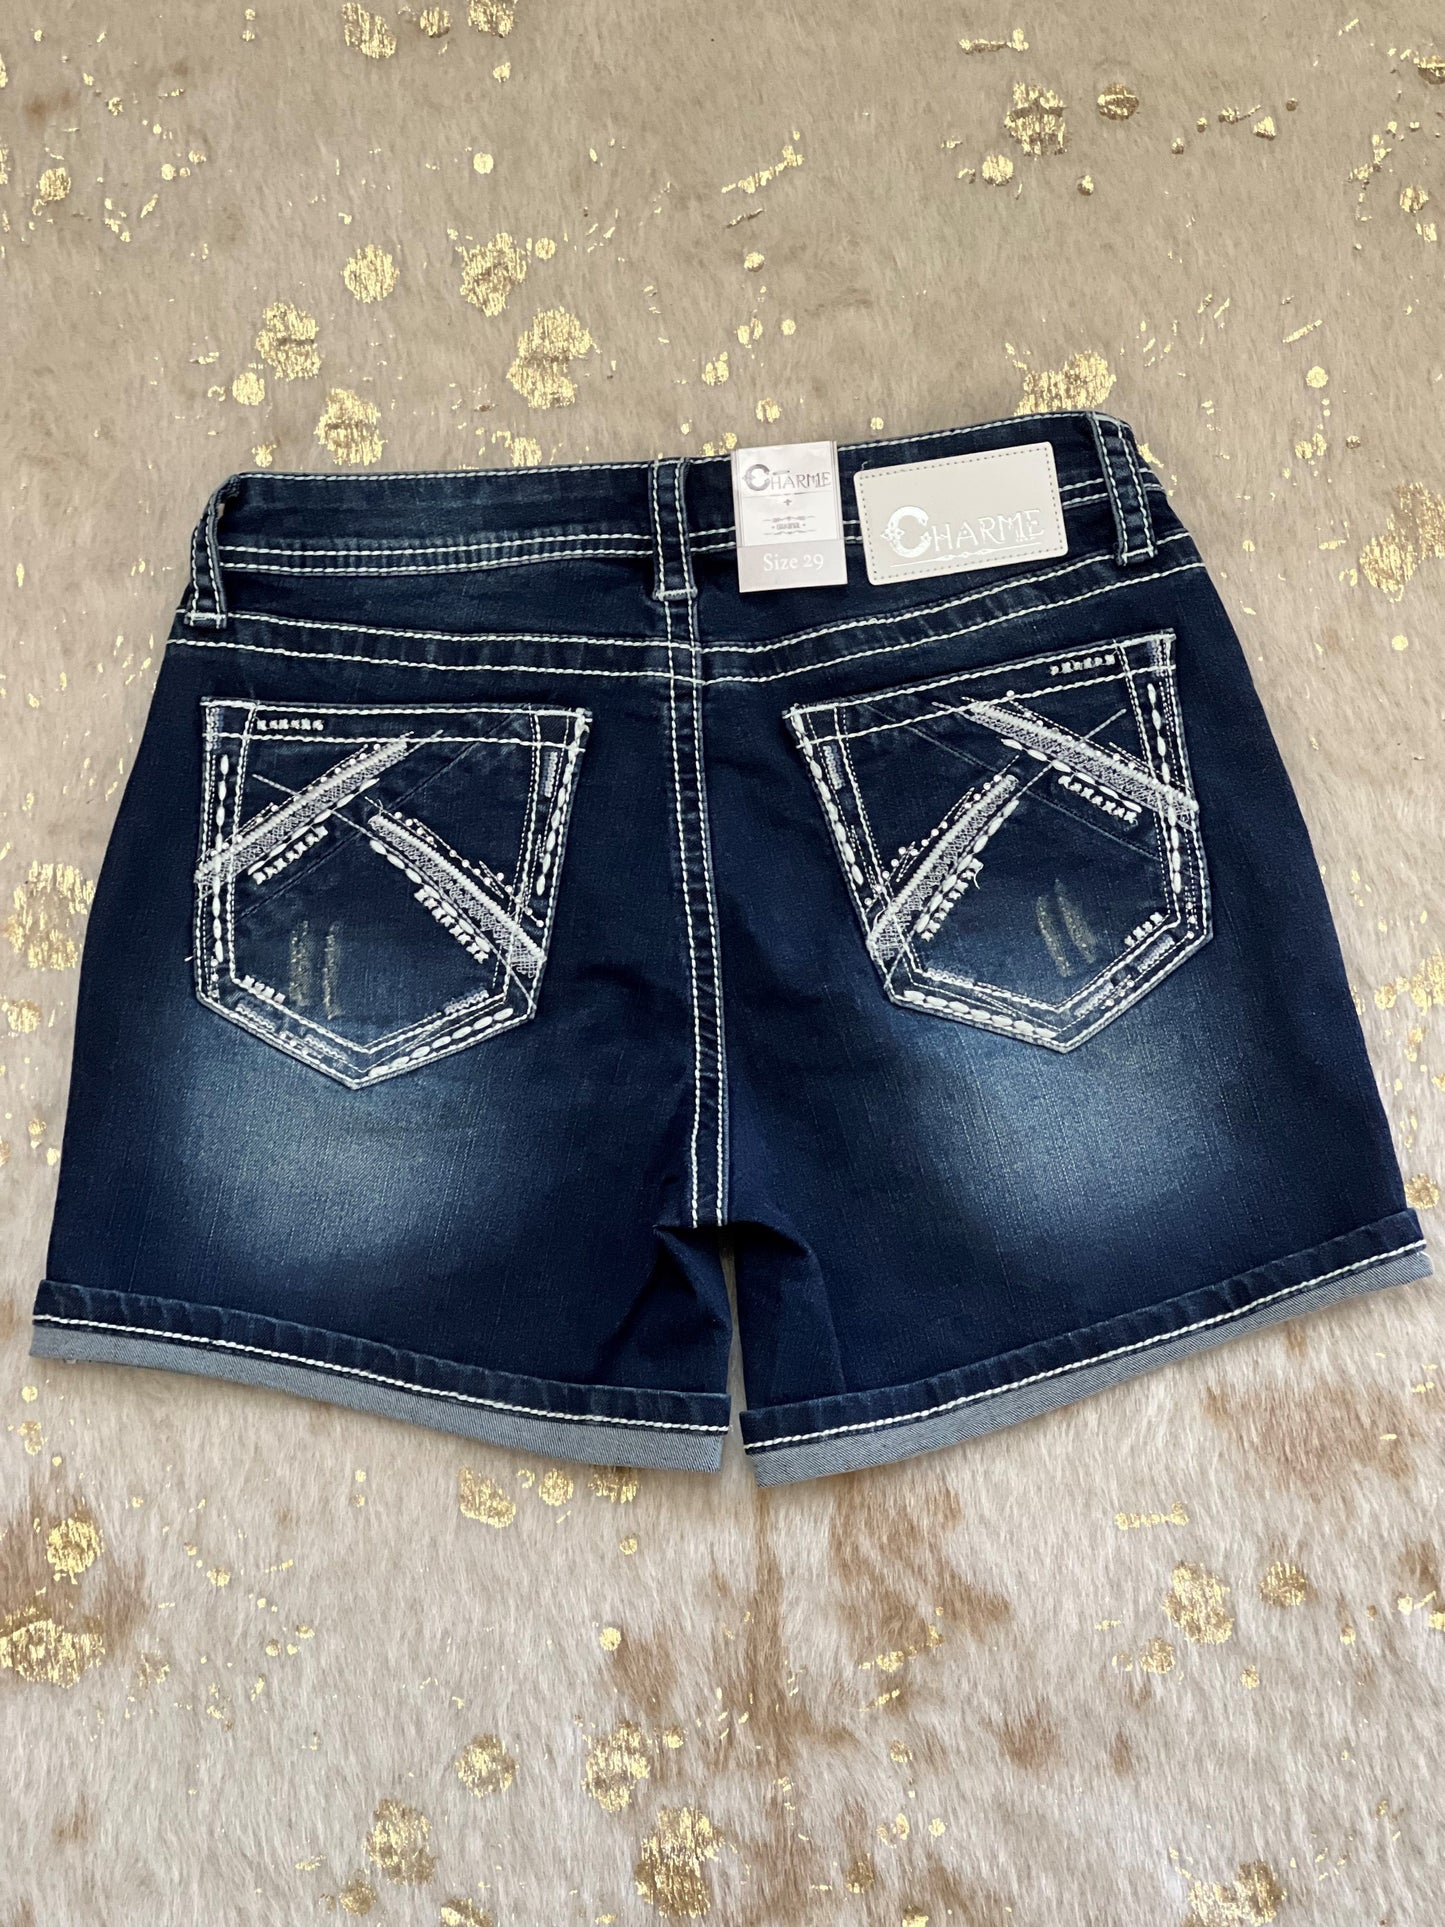 Womens Rhinestone Pocket Shorts